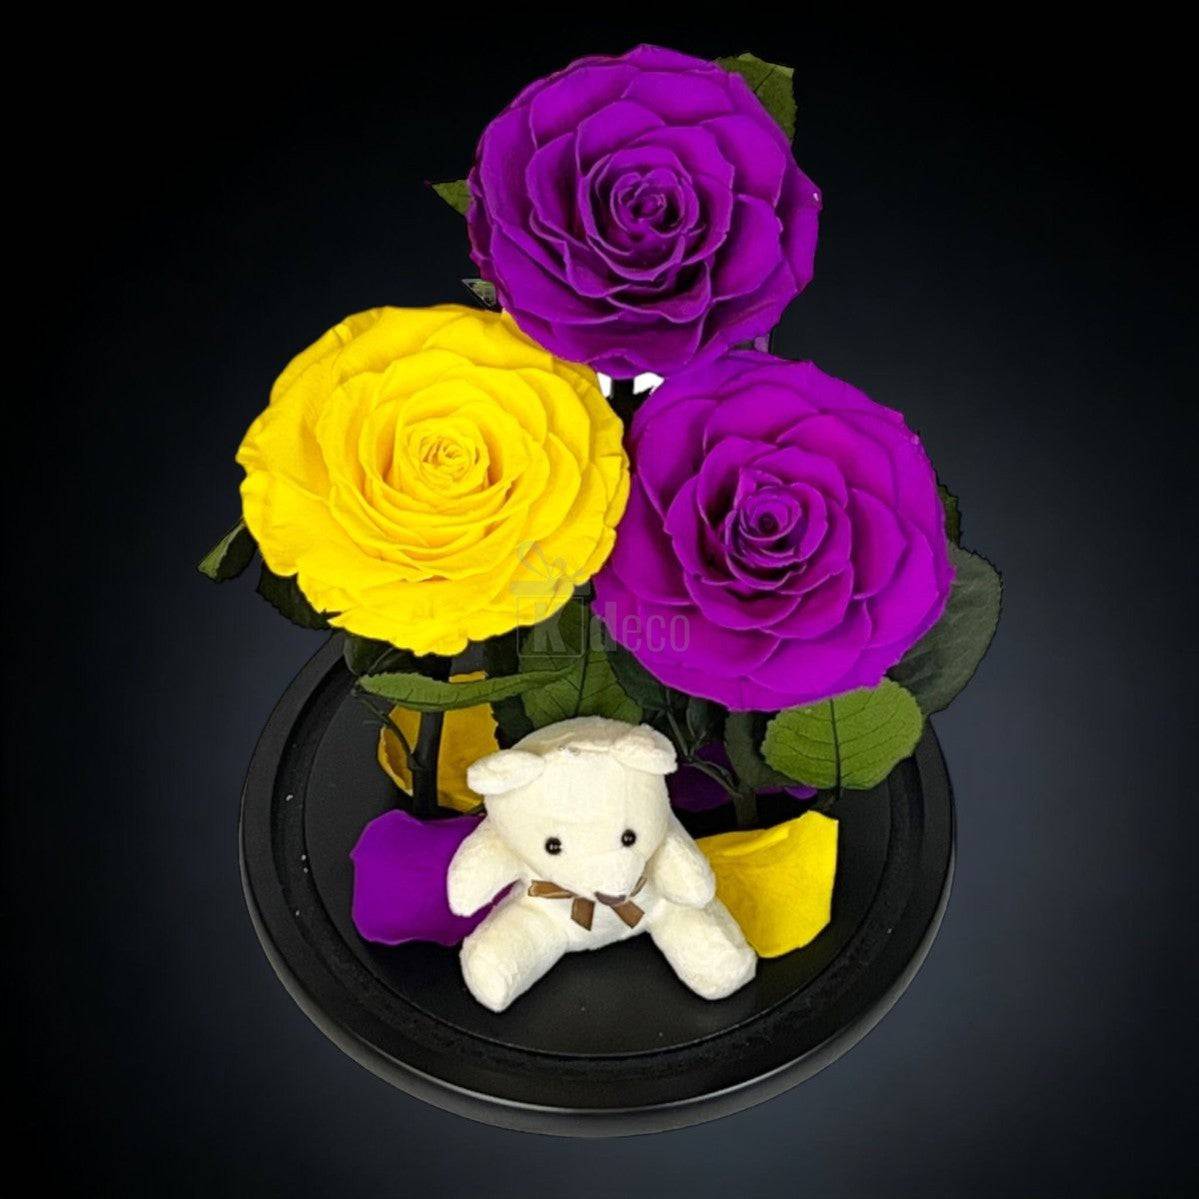 3 Trandafiri Criogenati mari (2 purpurii si 1 galben) in cupola sticla-Kdeco.ro